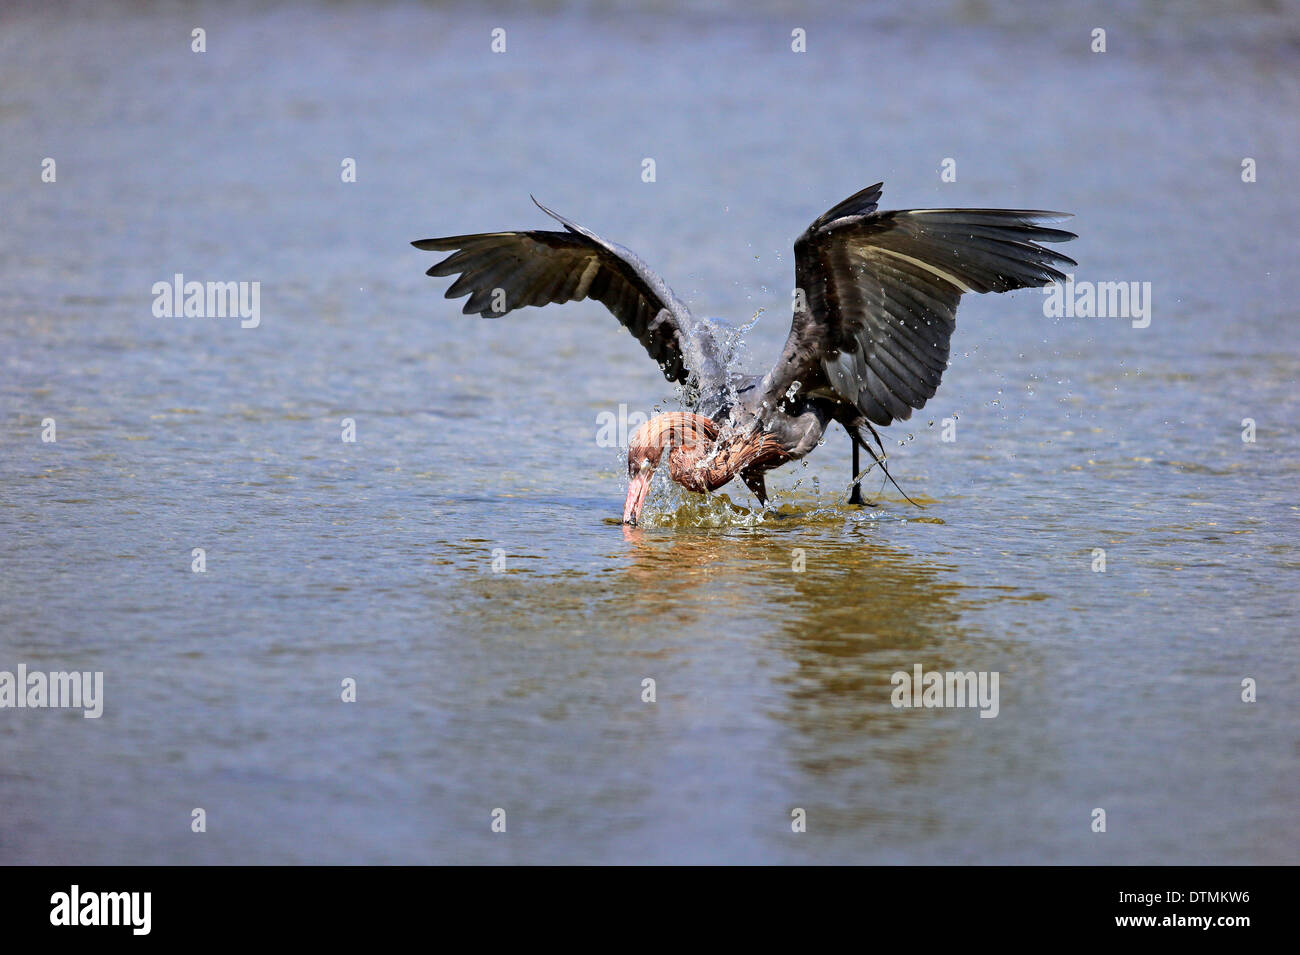 Reddish Egret, adult in water searching for food, Sanibel Island, Florida, USA, Northamerica / (Egretta rufescens) Stock Photo